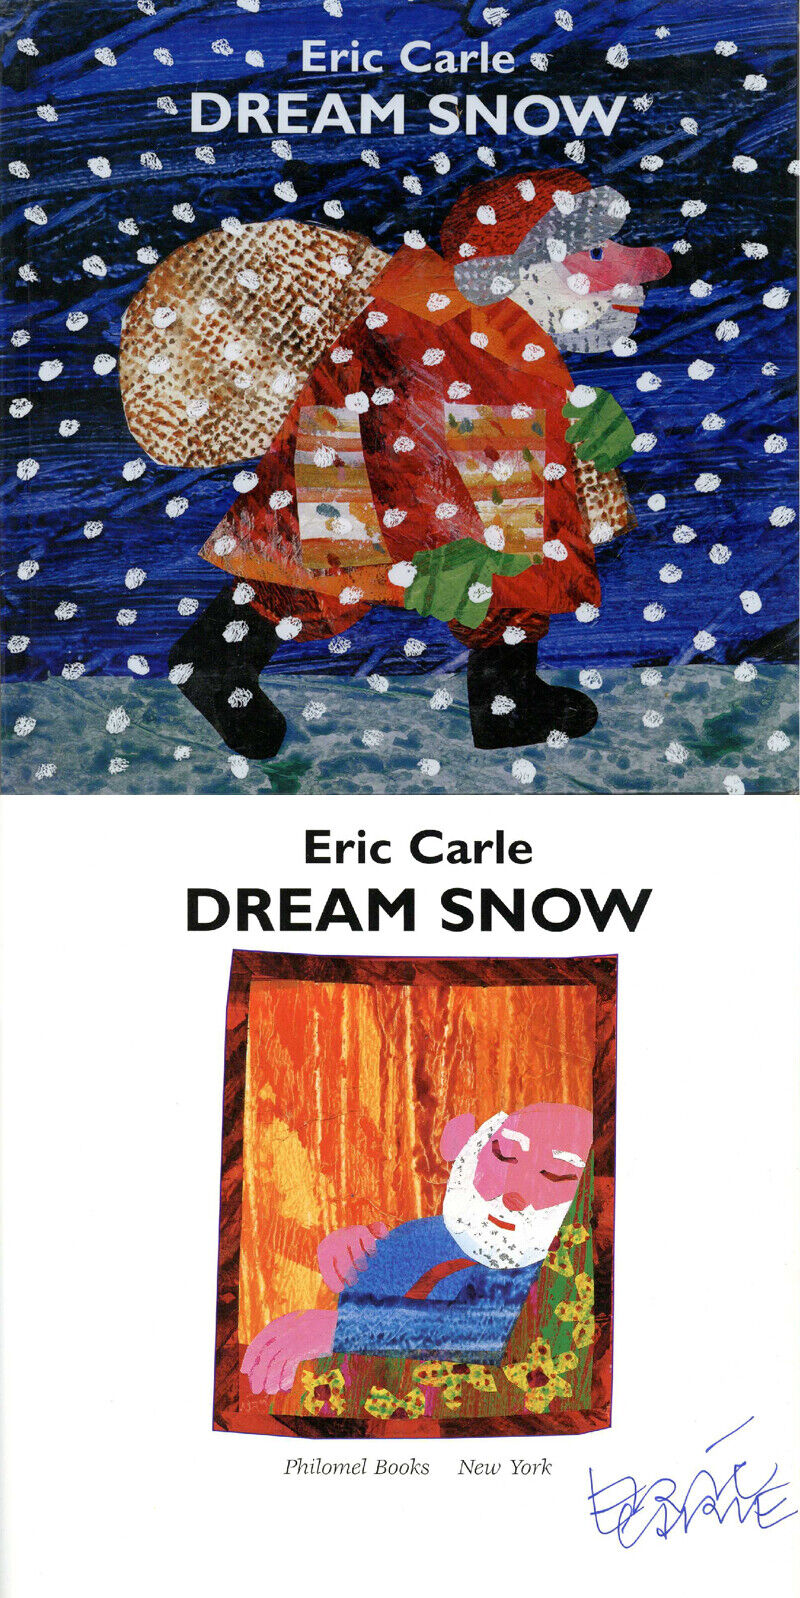 ERIC CARLE SIGNED DREAM SNOW HARDCOVER BOOK FIRST EDITION RARE BECKETT BAS LOA